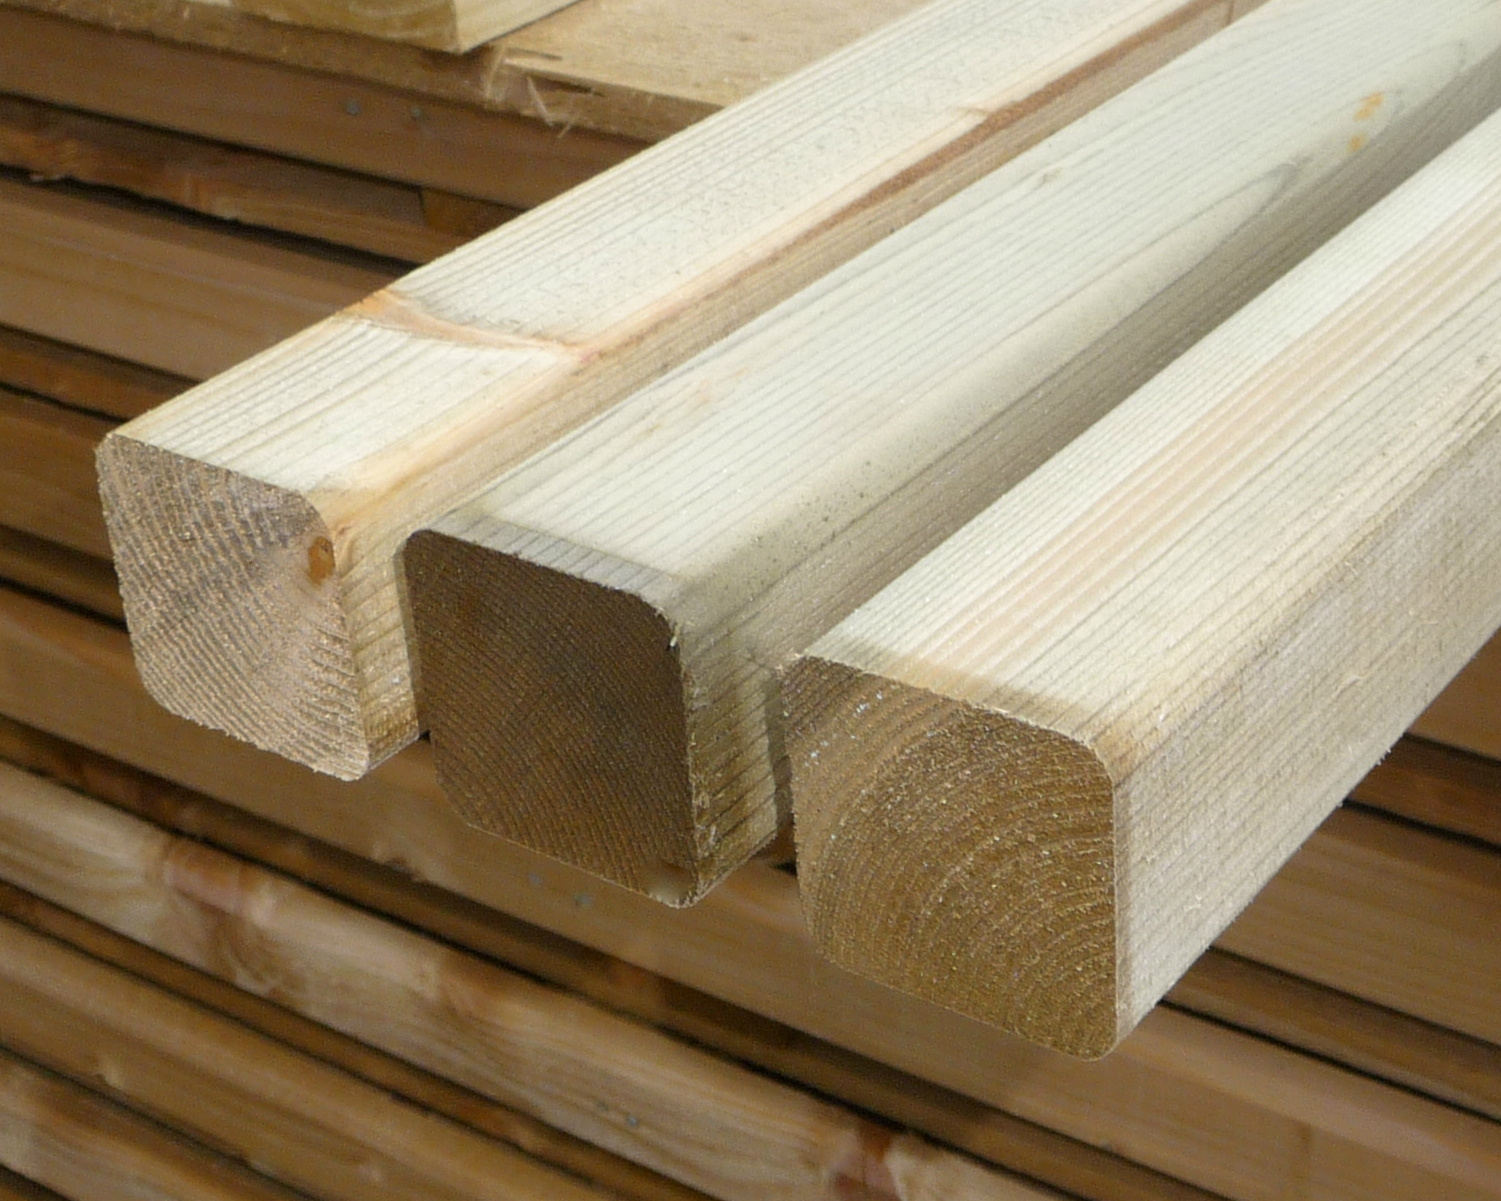 Sawn Timber 1.8m x 150mm x 100mm - 